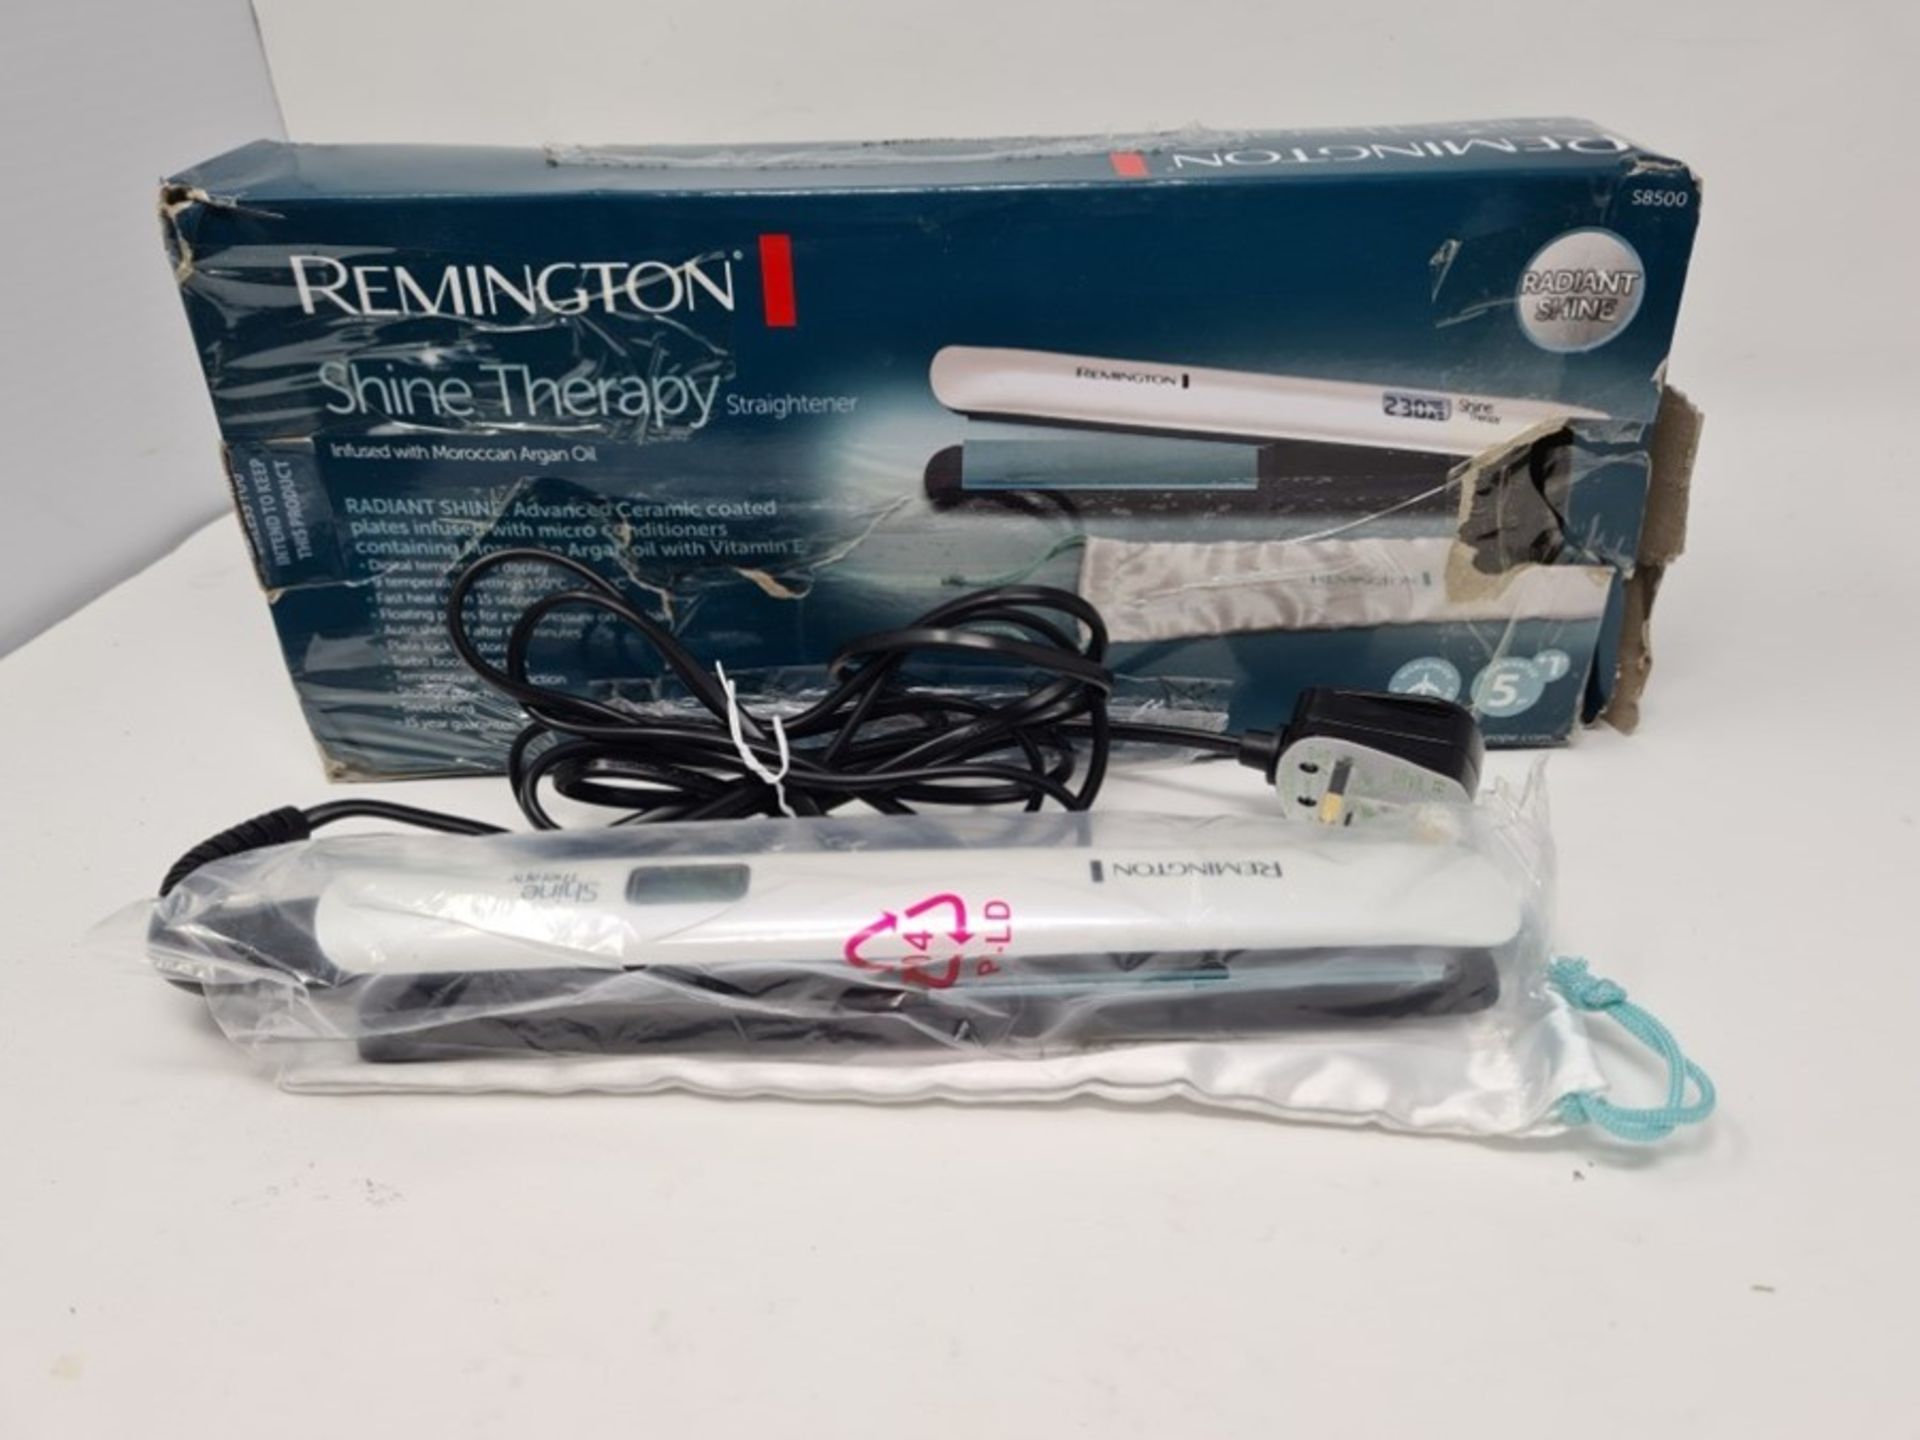 Remington Shine Therapy Advanced Ceramic Hair St - Image 2 of 2